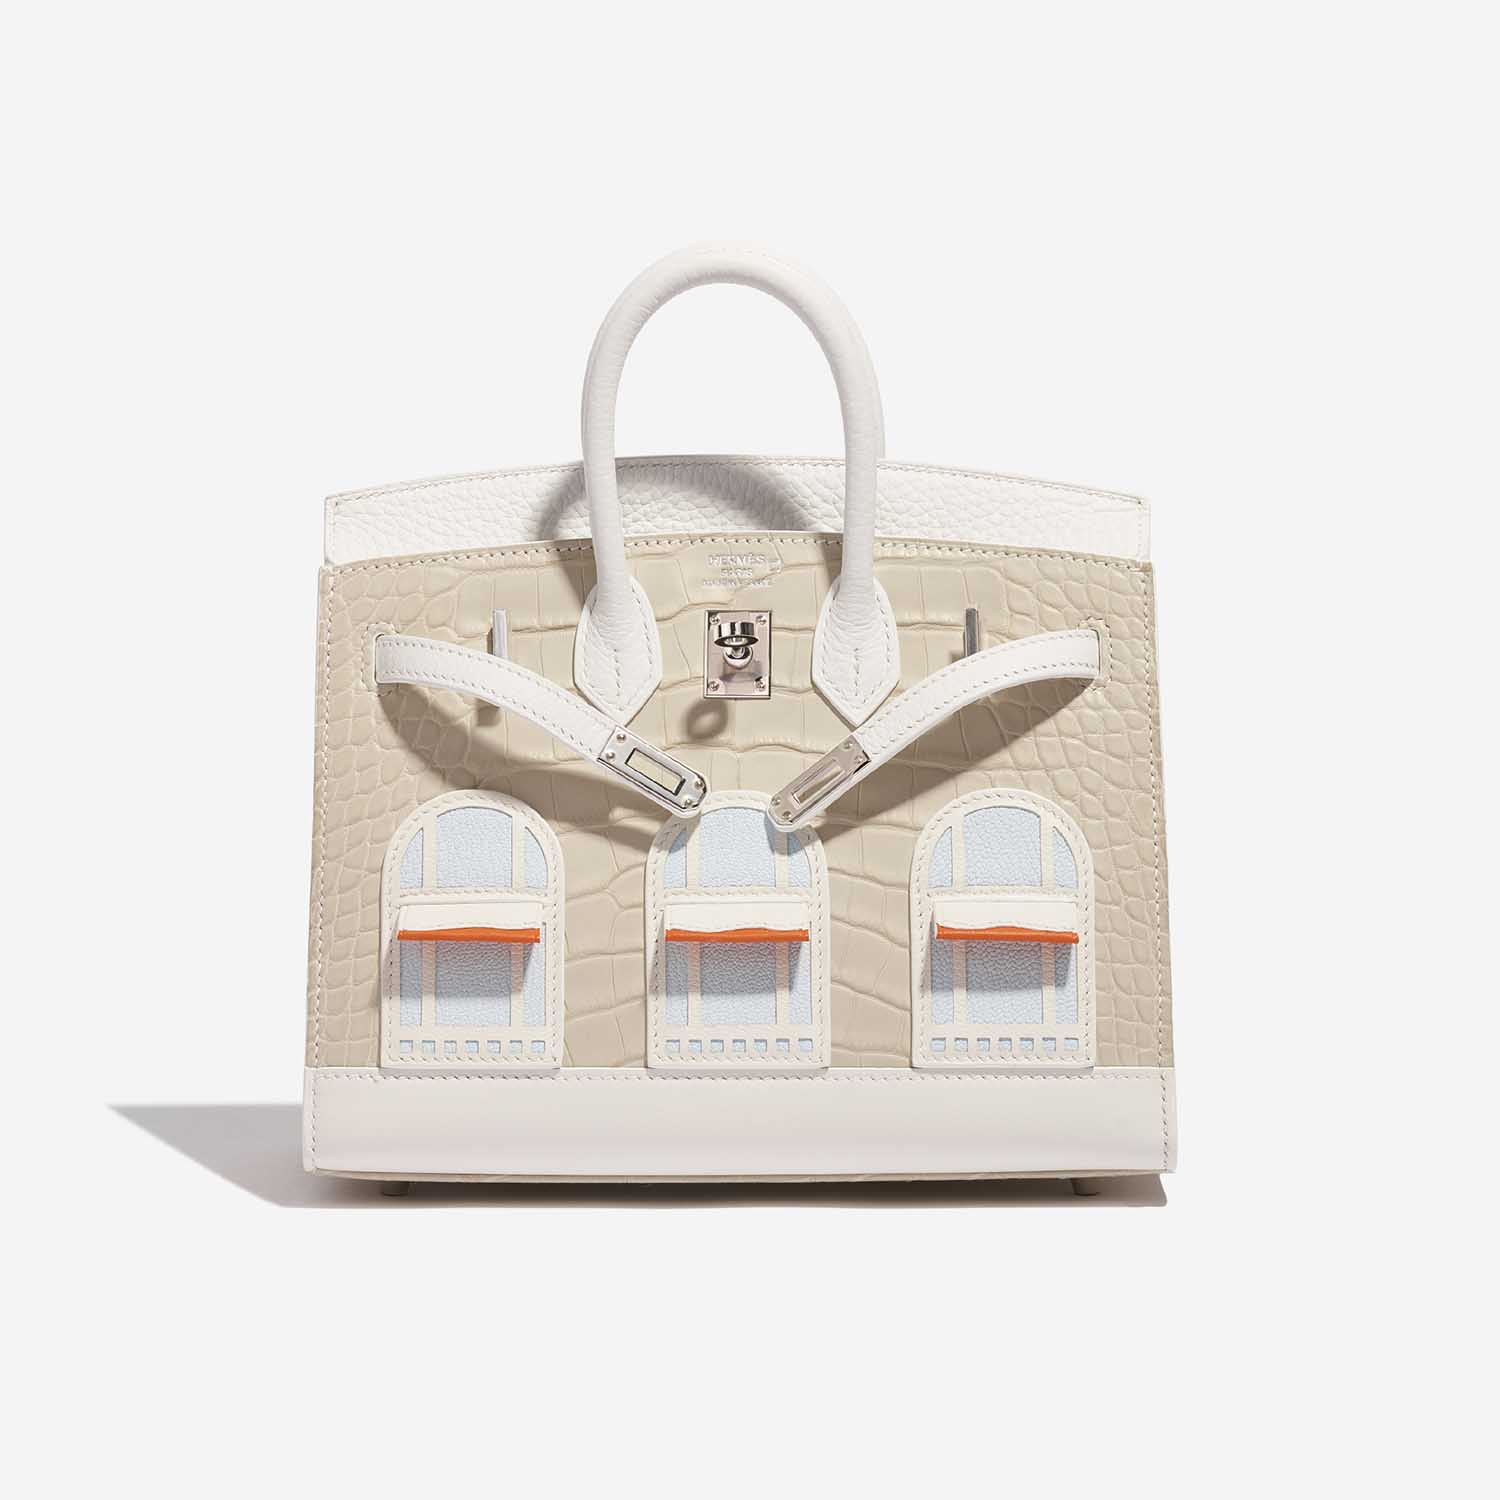 Pre-owned Hermès bag Birkin 20 Faubourg Matte Alligator / Togo / Epsom / Swift White / Beton / Orange H / Blue Brume / Craie Beige, White Front Open | Sell your designer bag on Saclab.com